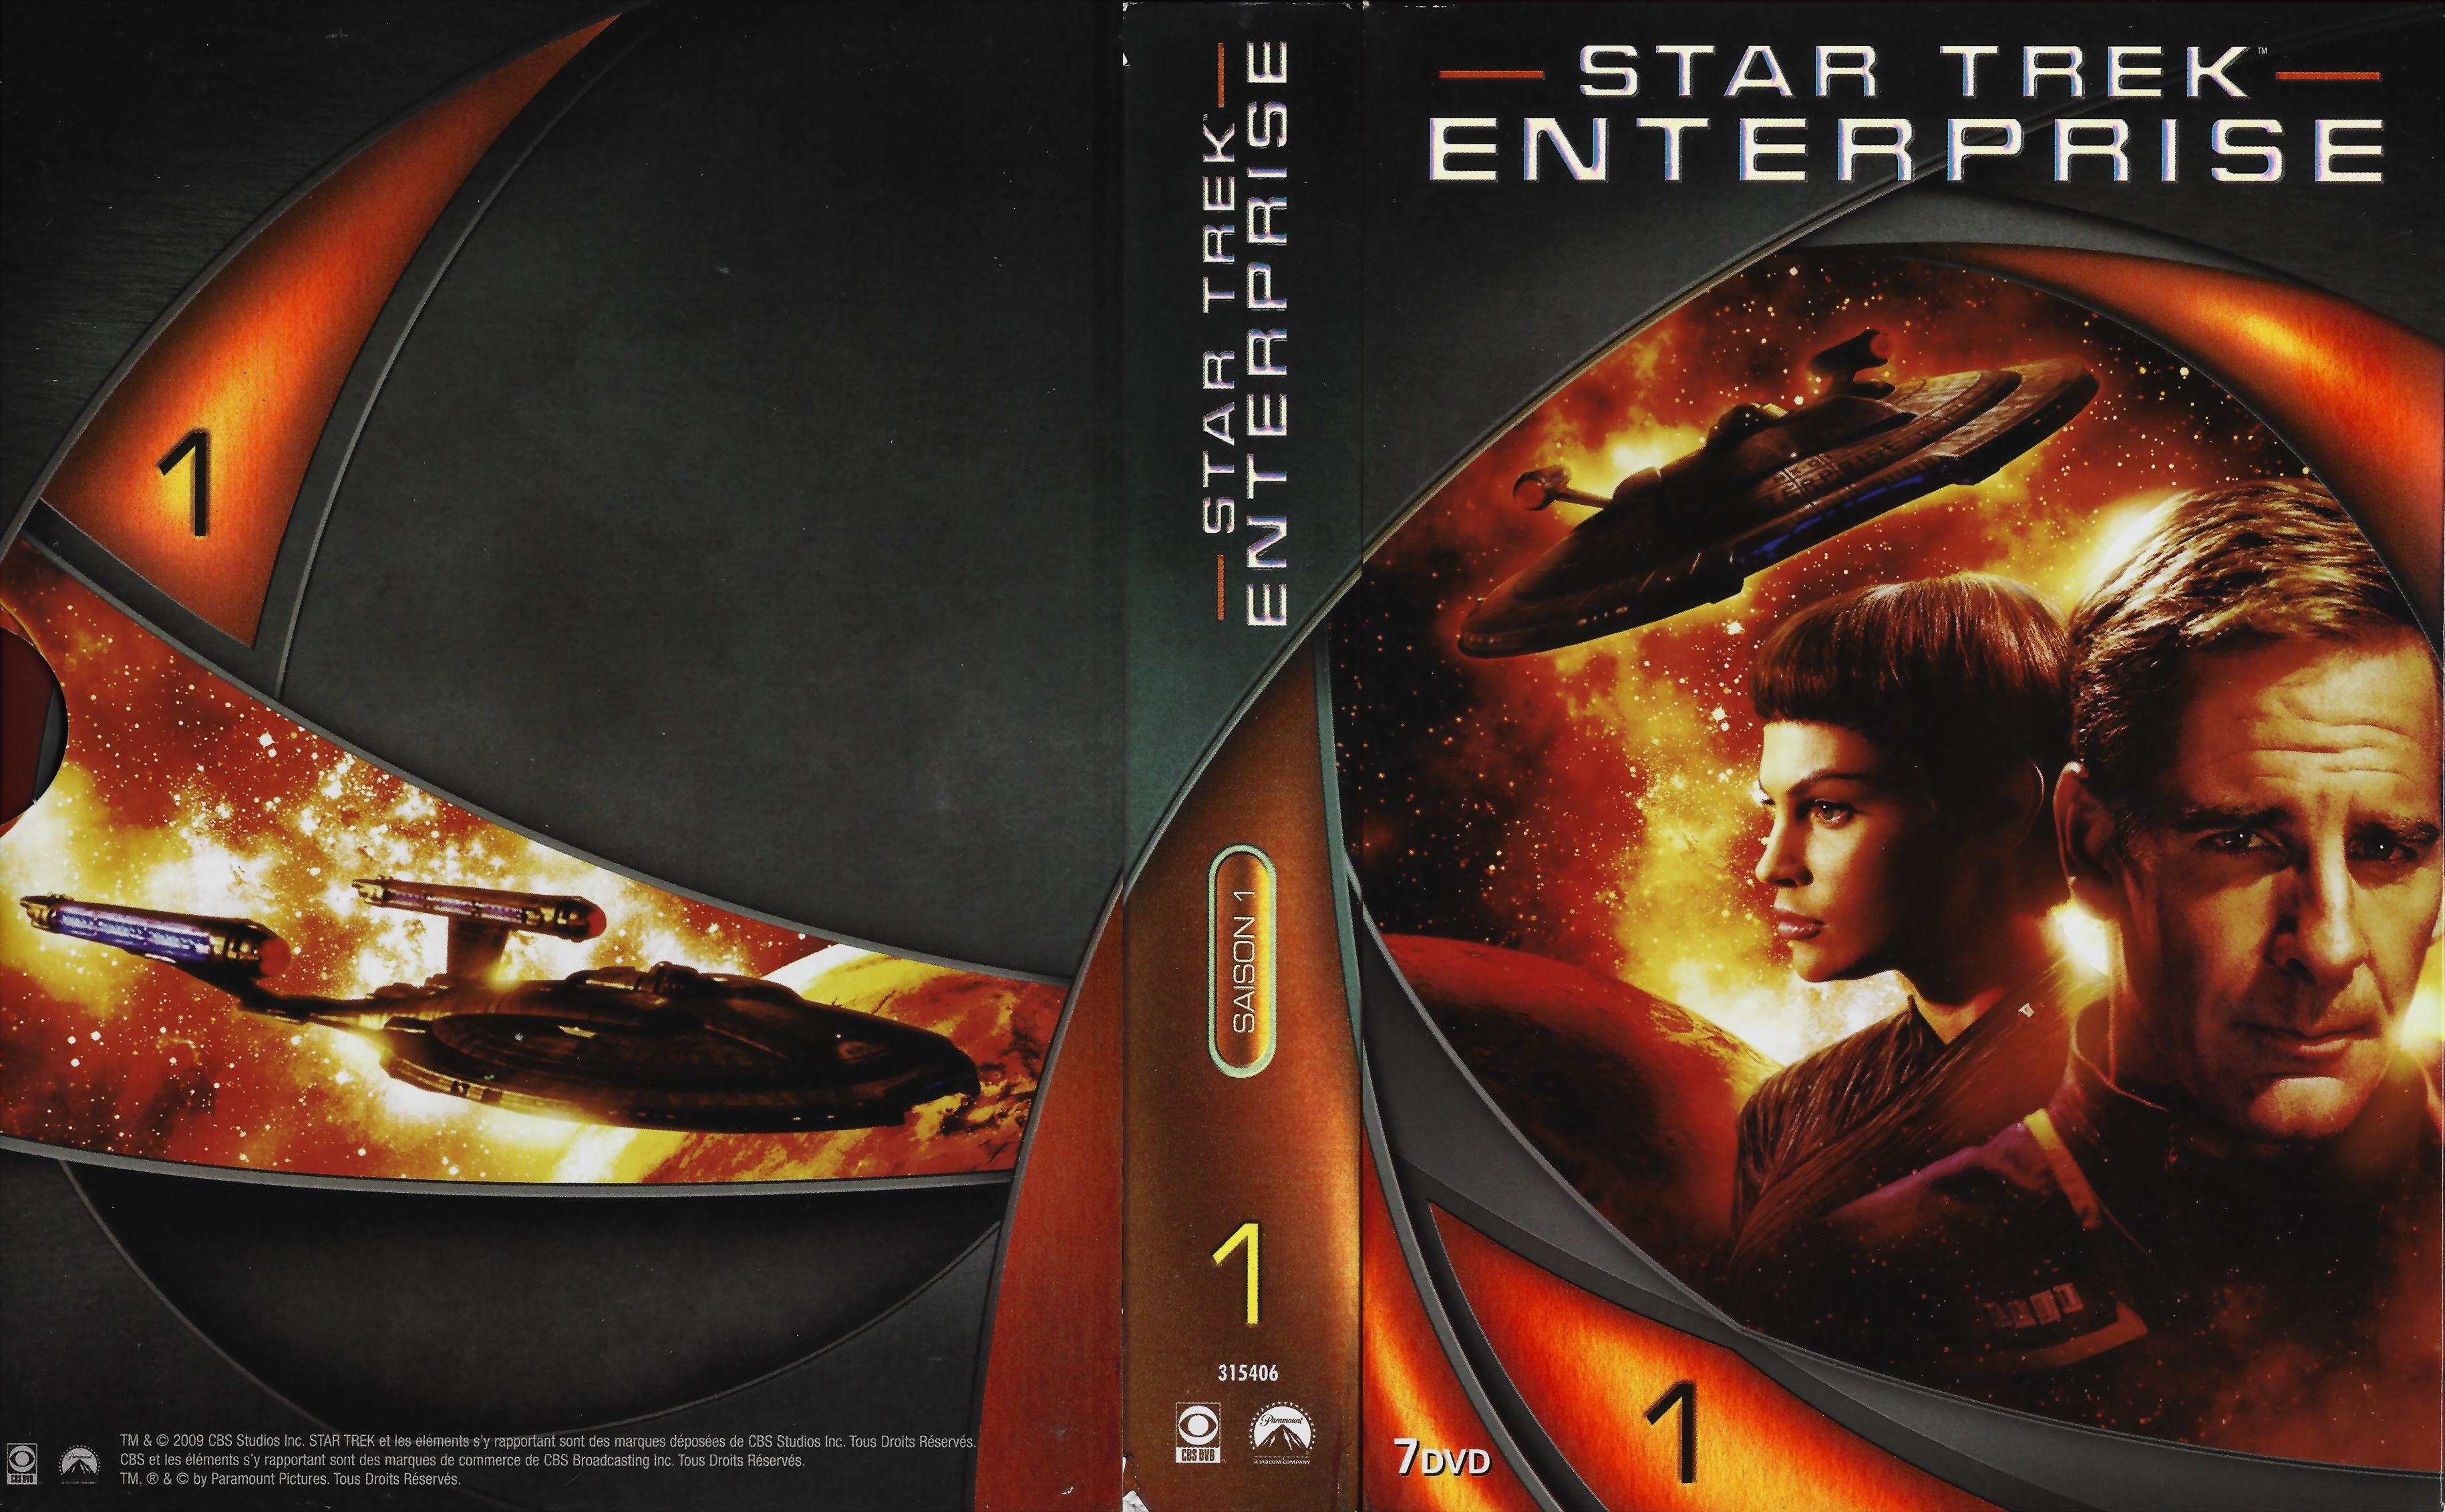 Jaquette DVD Star Trek Enterprise saison 1